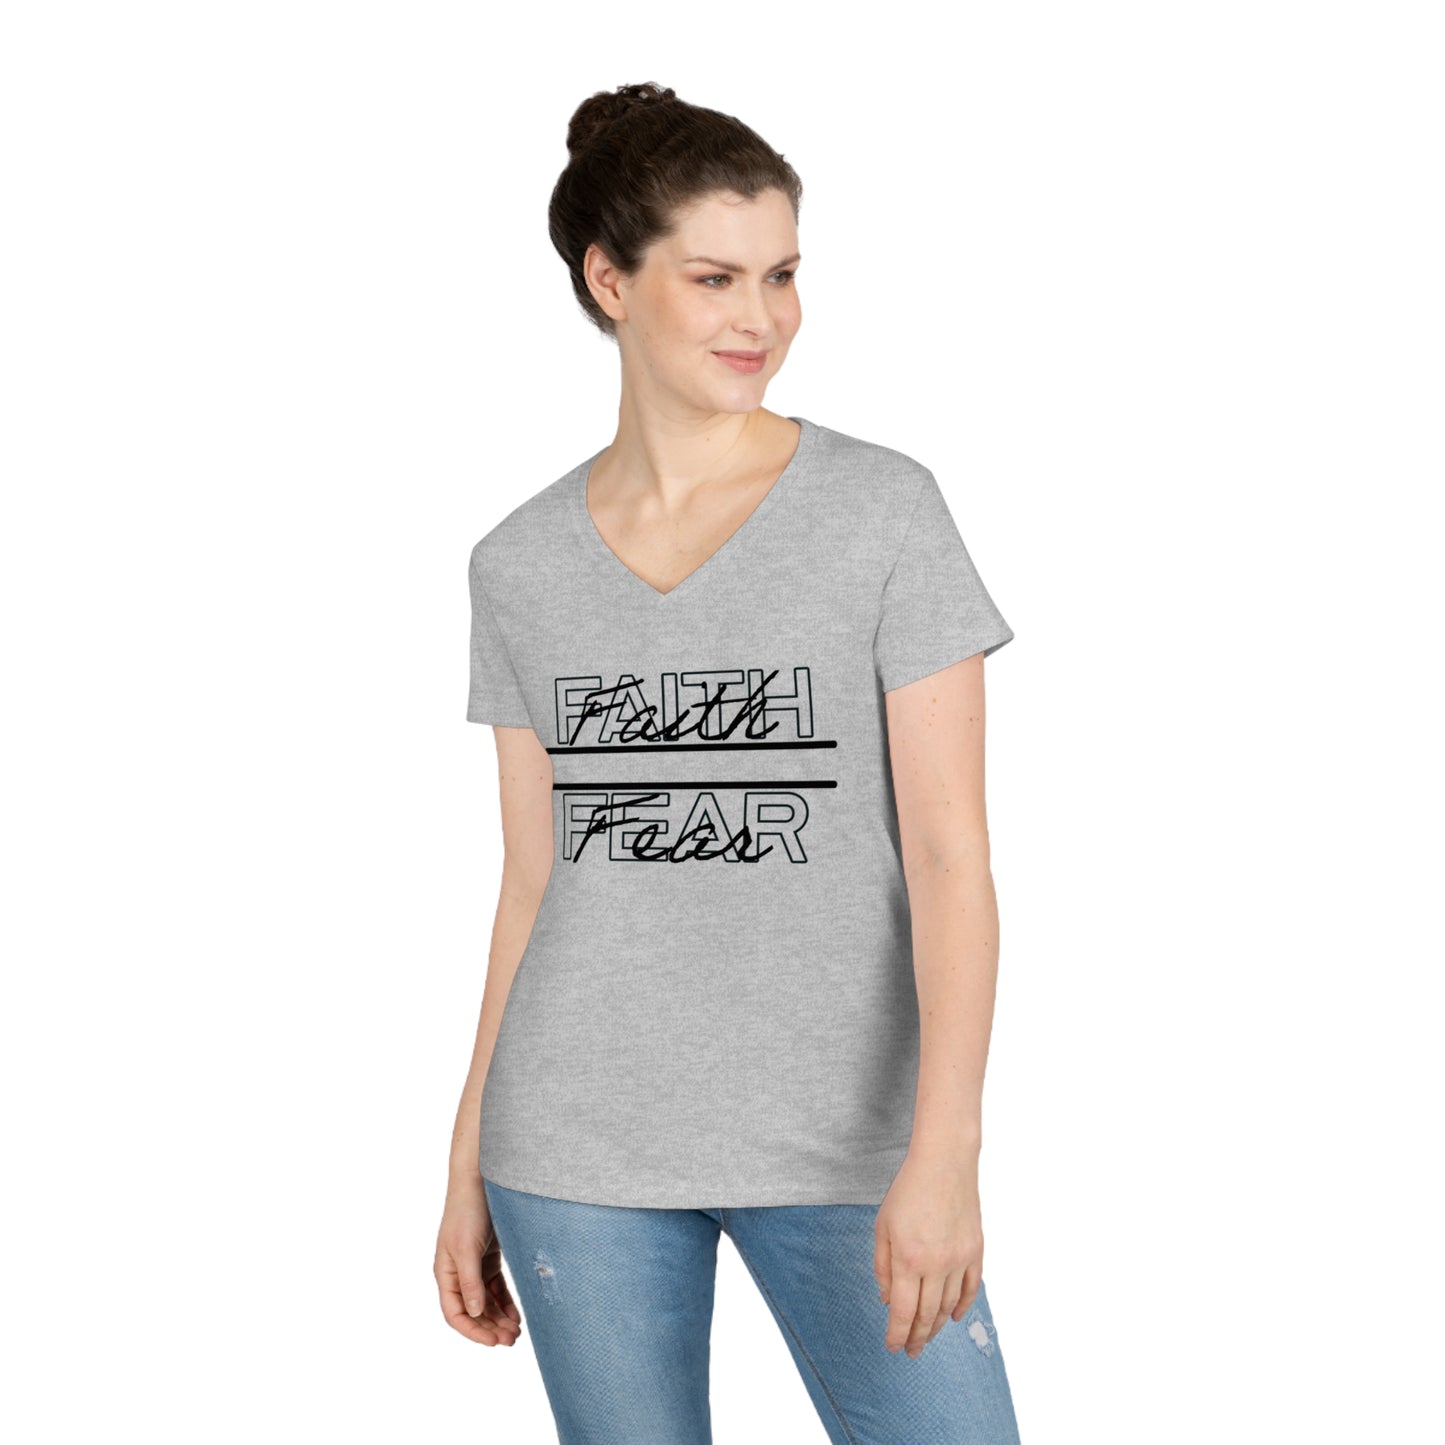 Ladies' V-Neck T-Shirt, Bible Verse Shirt, Women's V Neck Short Sleeve T-Shirt